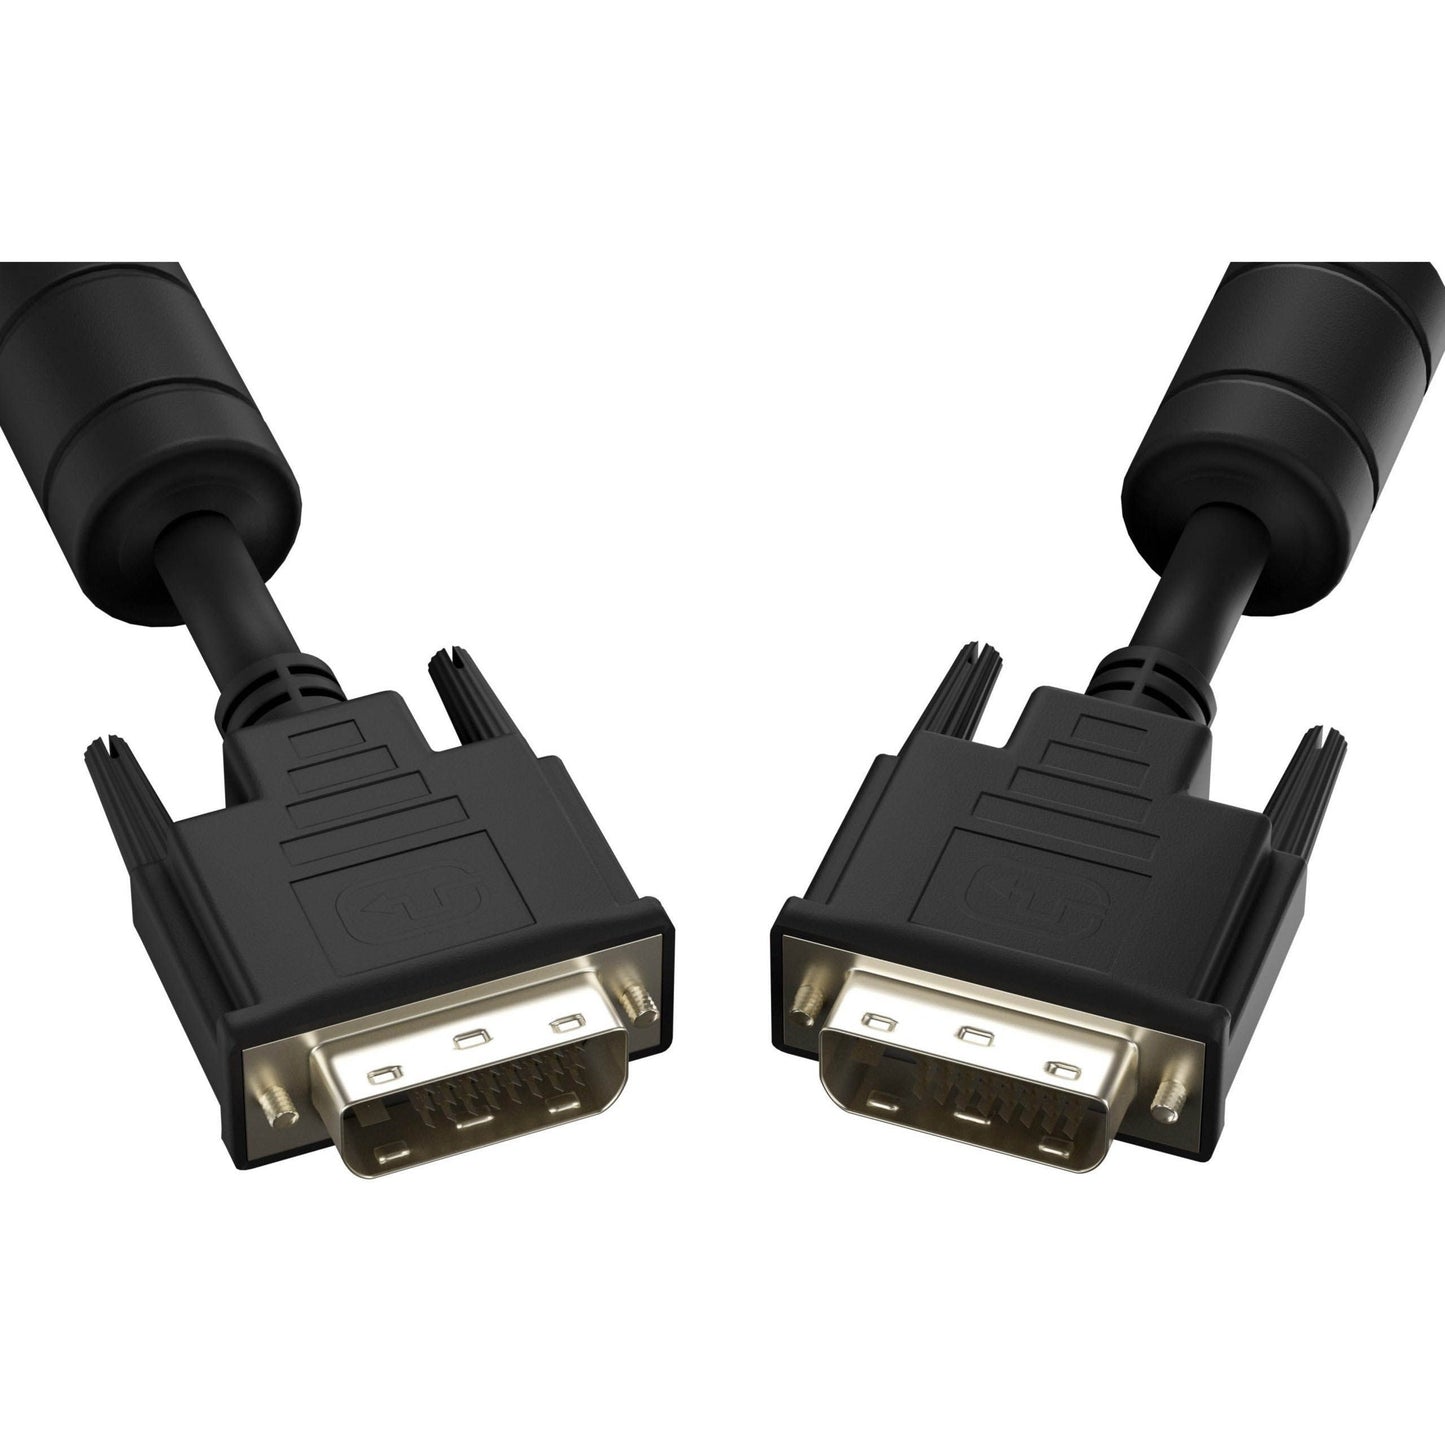 Unirise DVI-D Dual Link 24+1 Male - Male